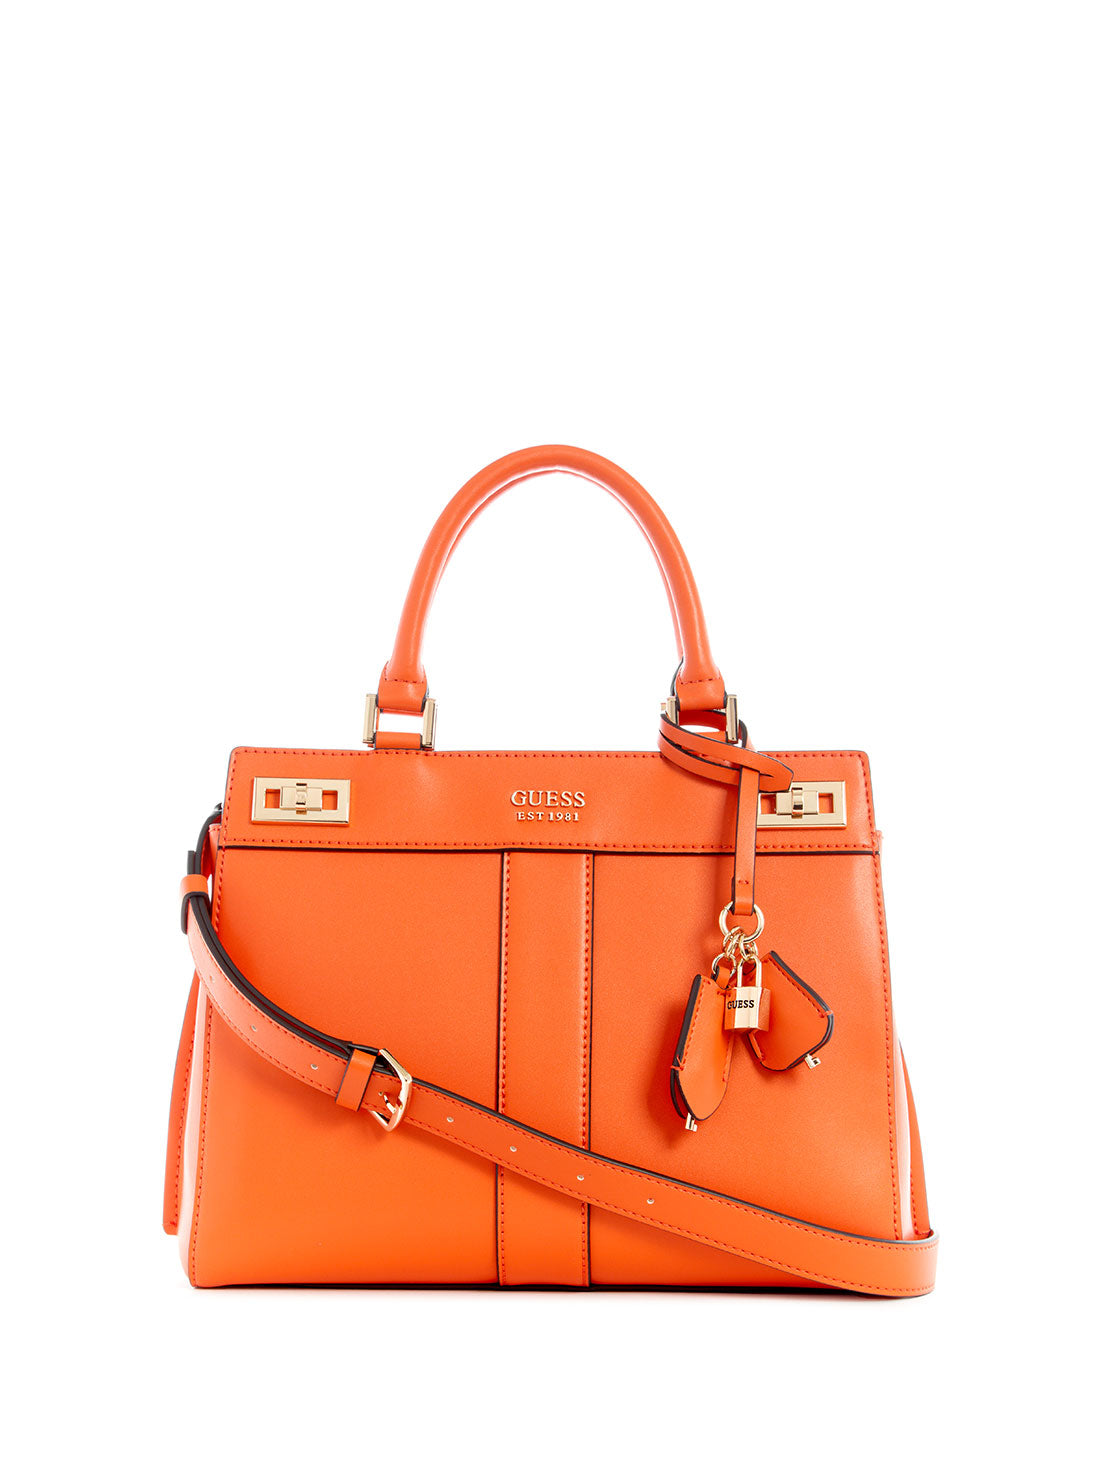 GUESS Women's Orange Katey Luxury Satchel Bag VC787026 Front View